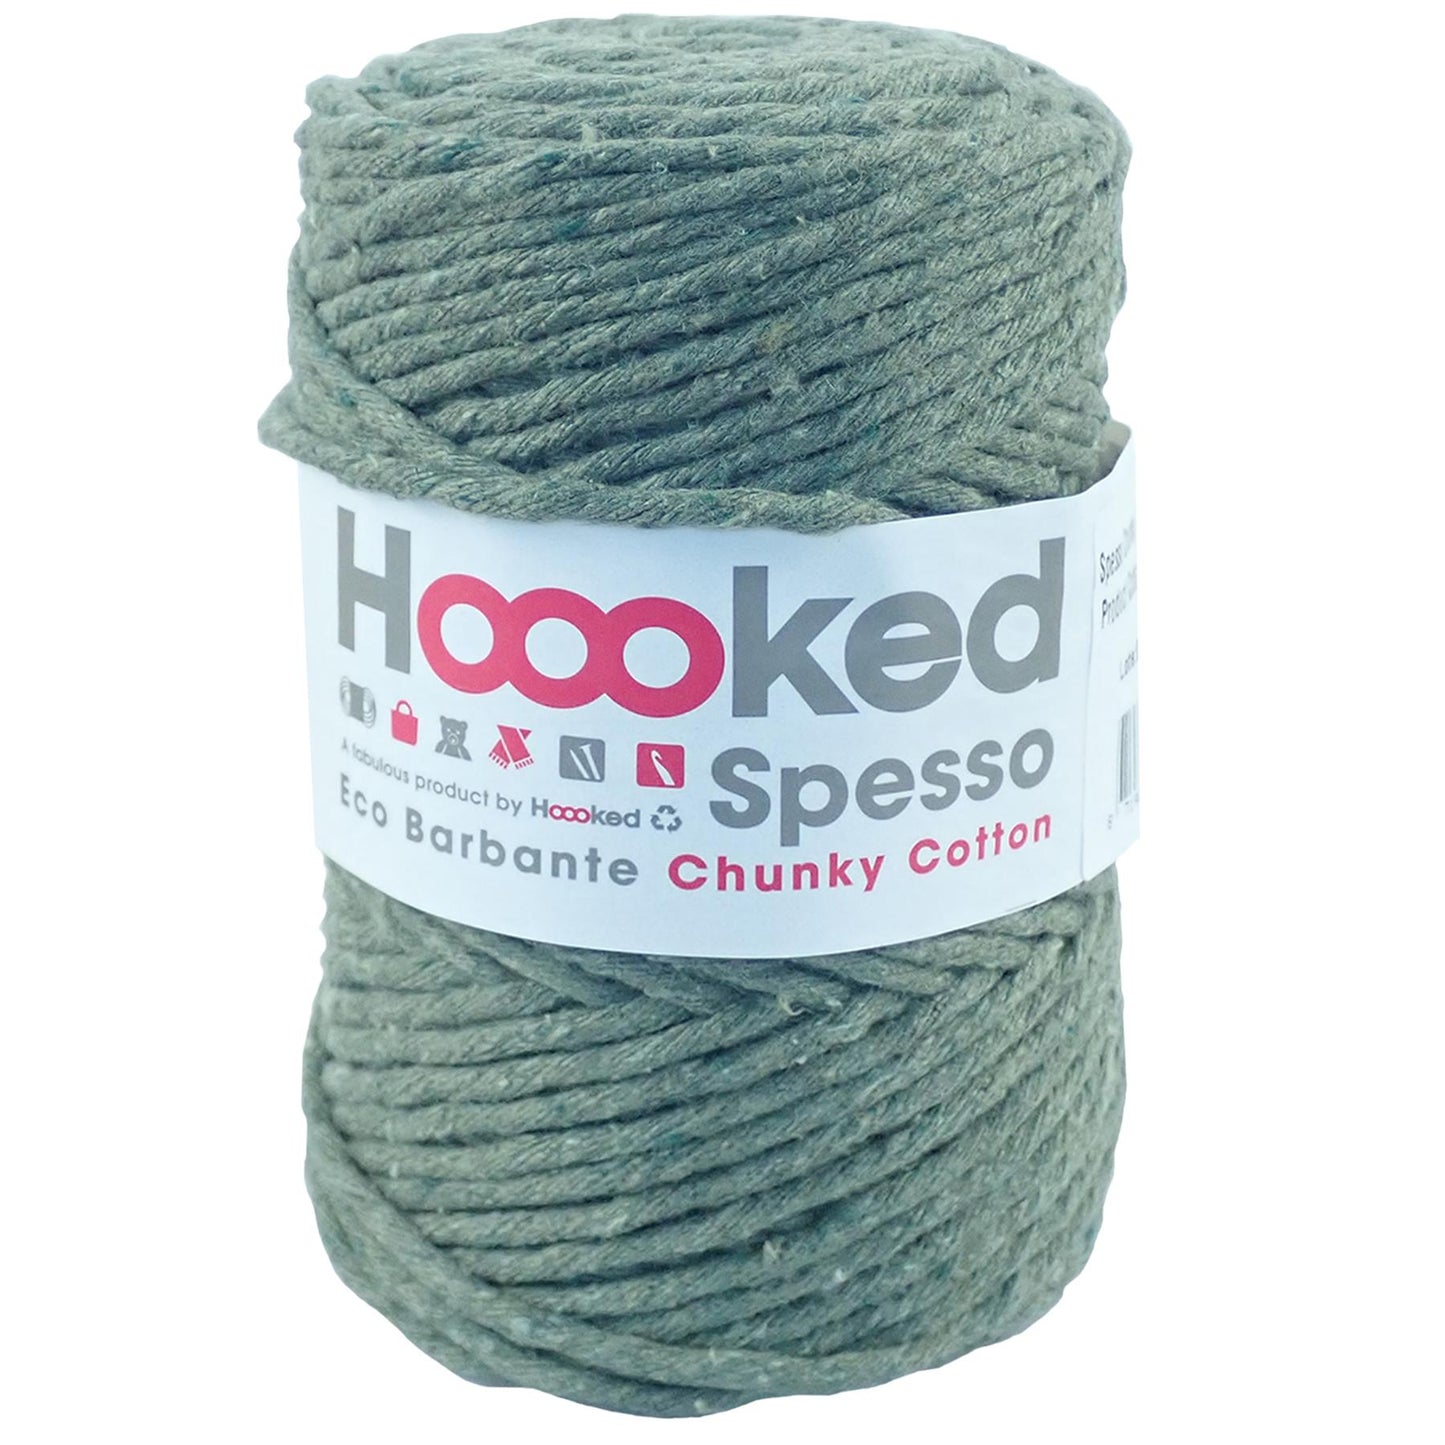 [Hoooked] S805 Spesso Chunky Aspen Green Cotton Yarn - 127M, 500g